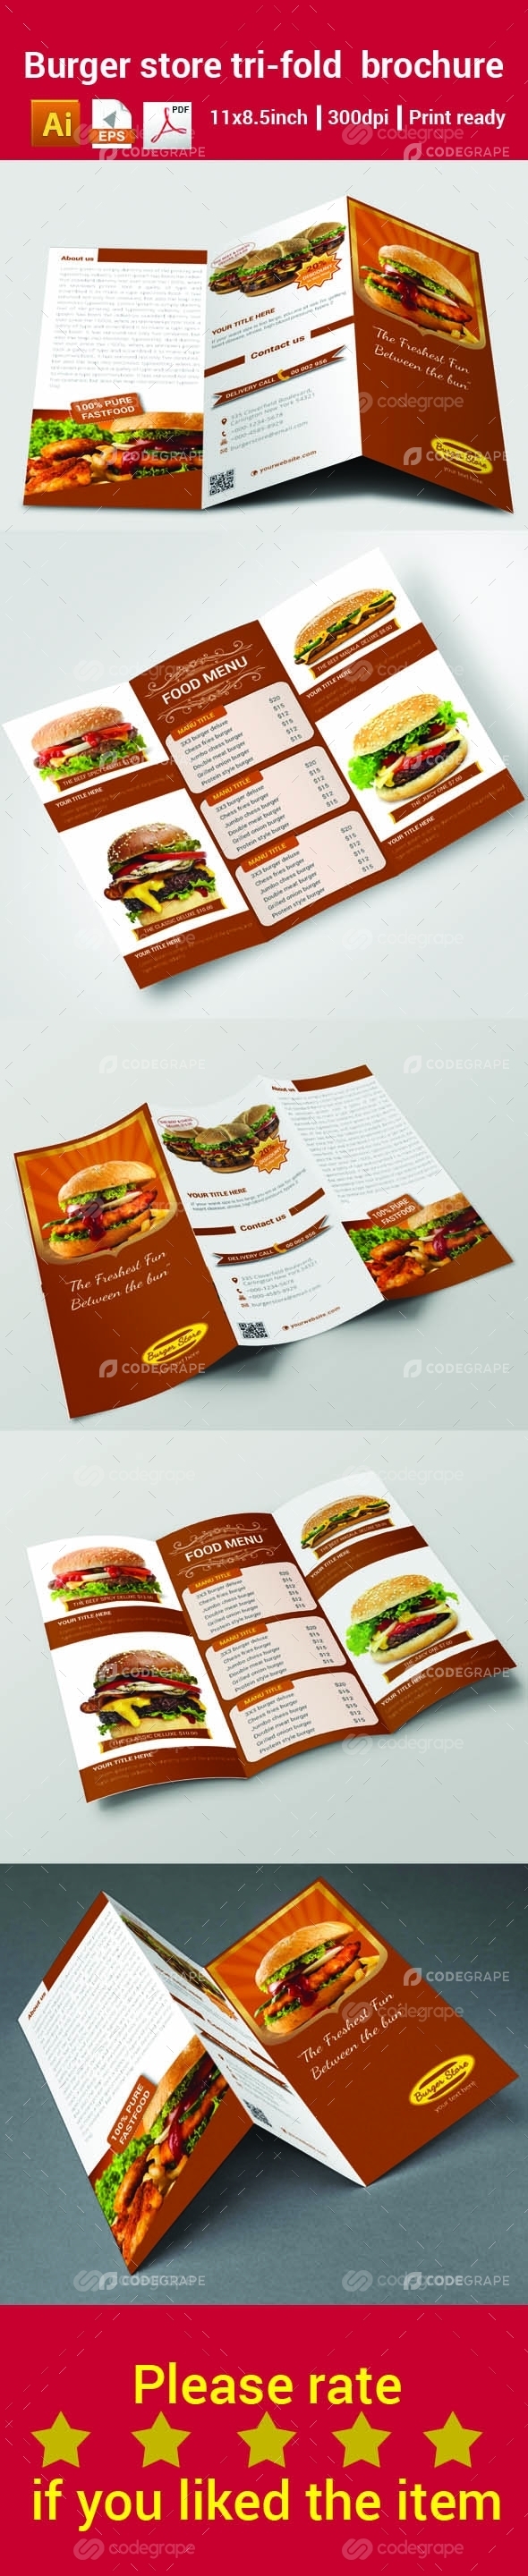 Burger Store Tri-Fold Brochure